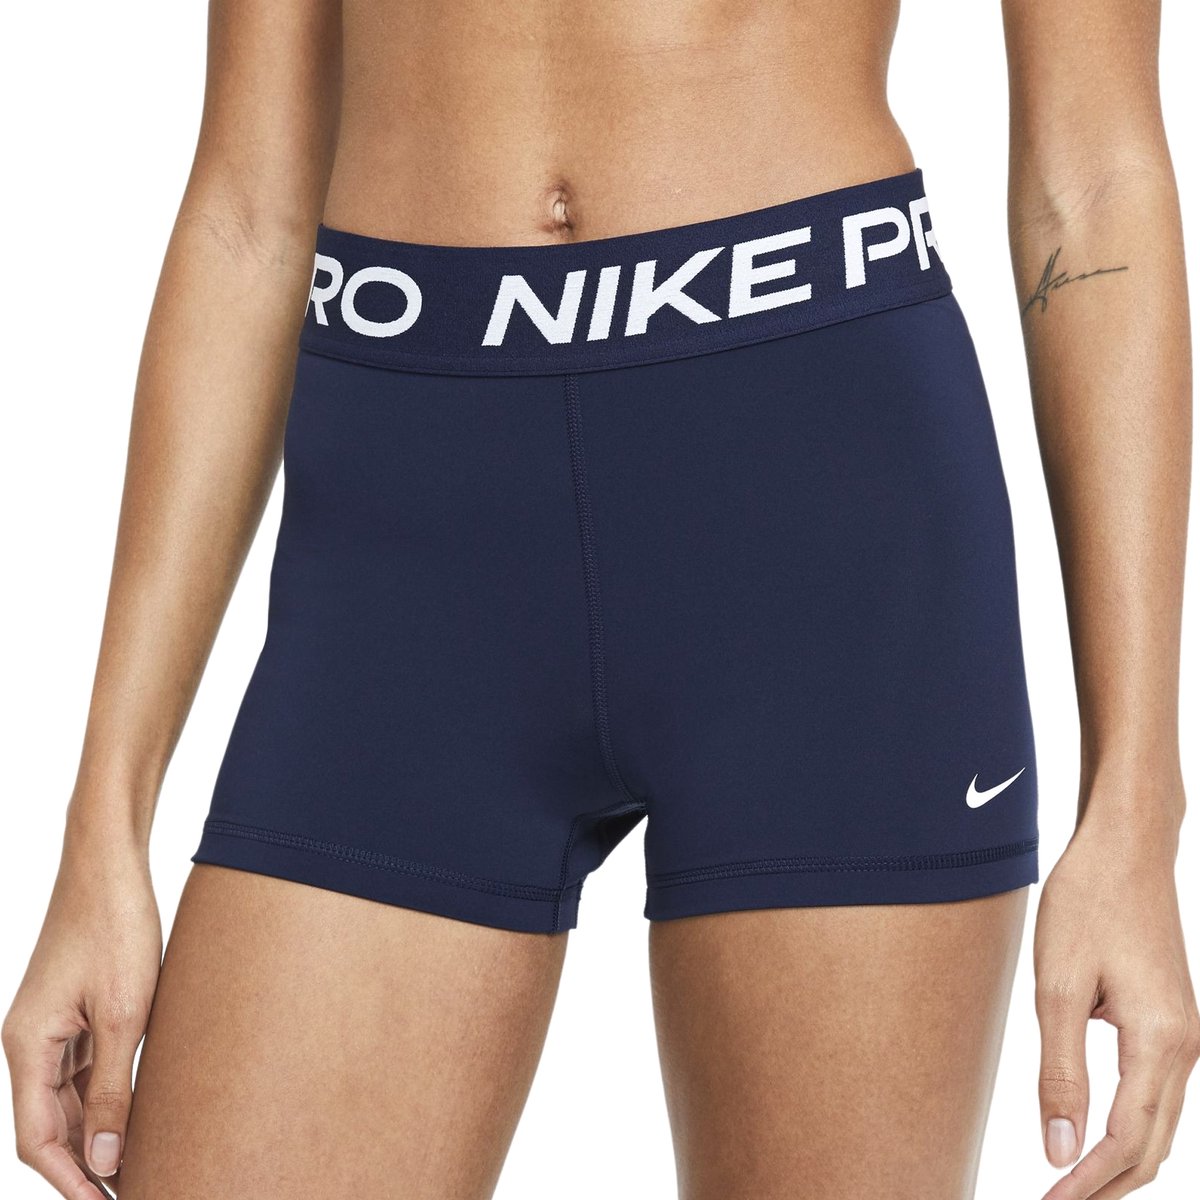 Nike Pro Sportbroek Vrouwen - Maat L - Nike